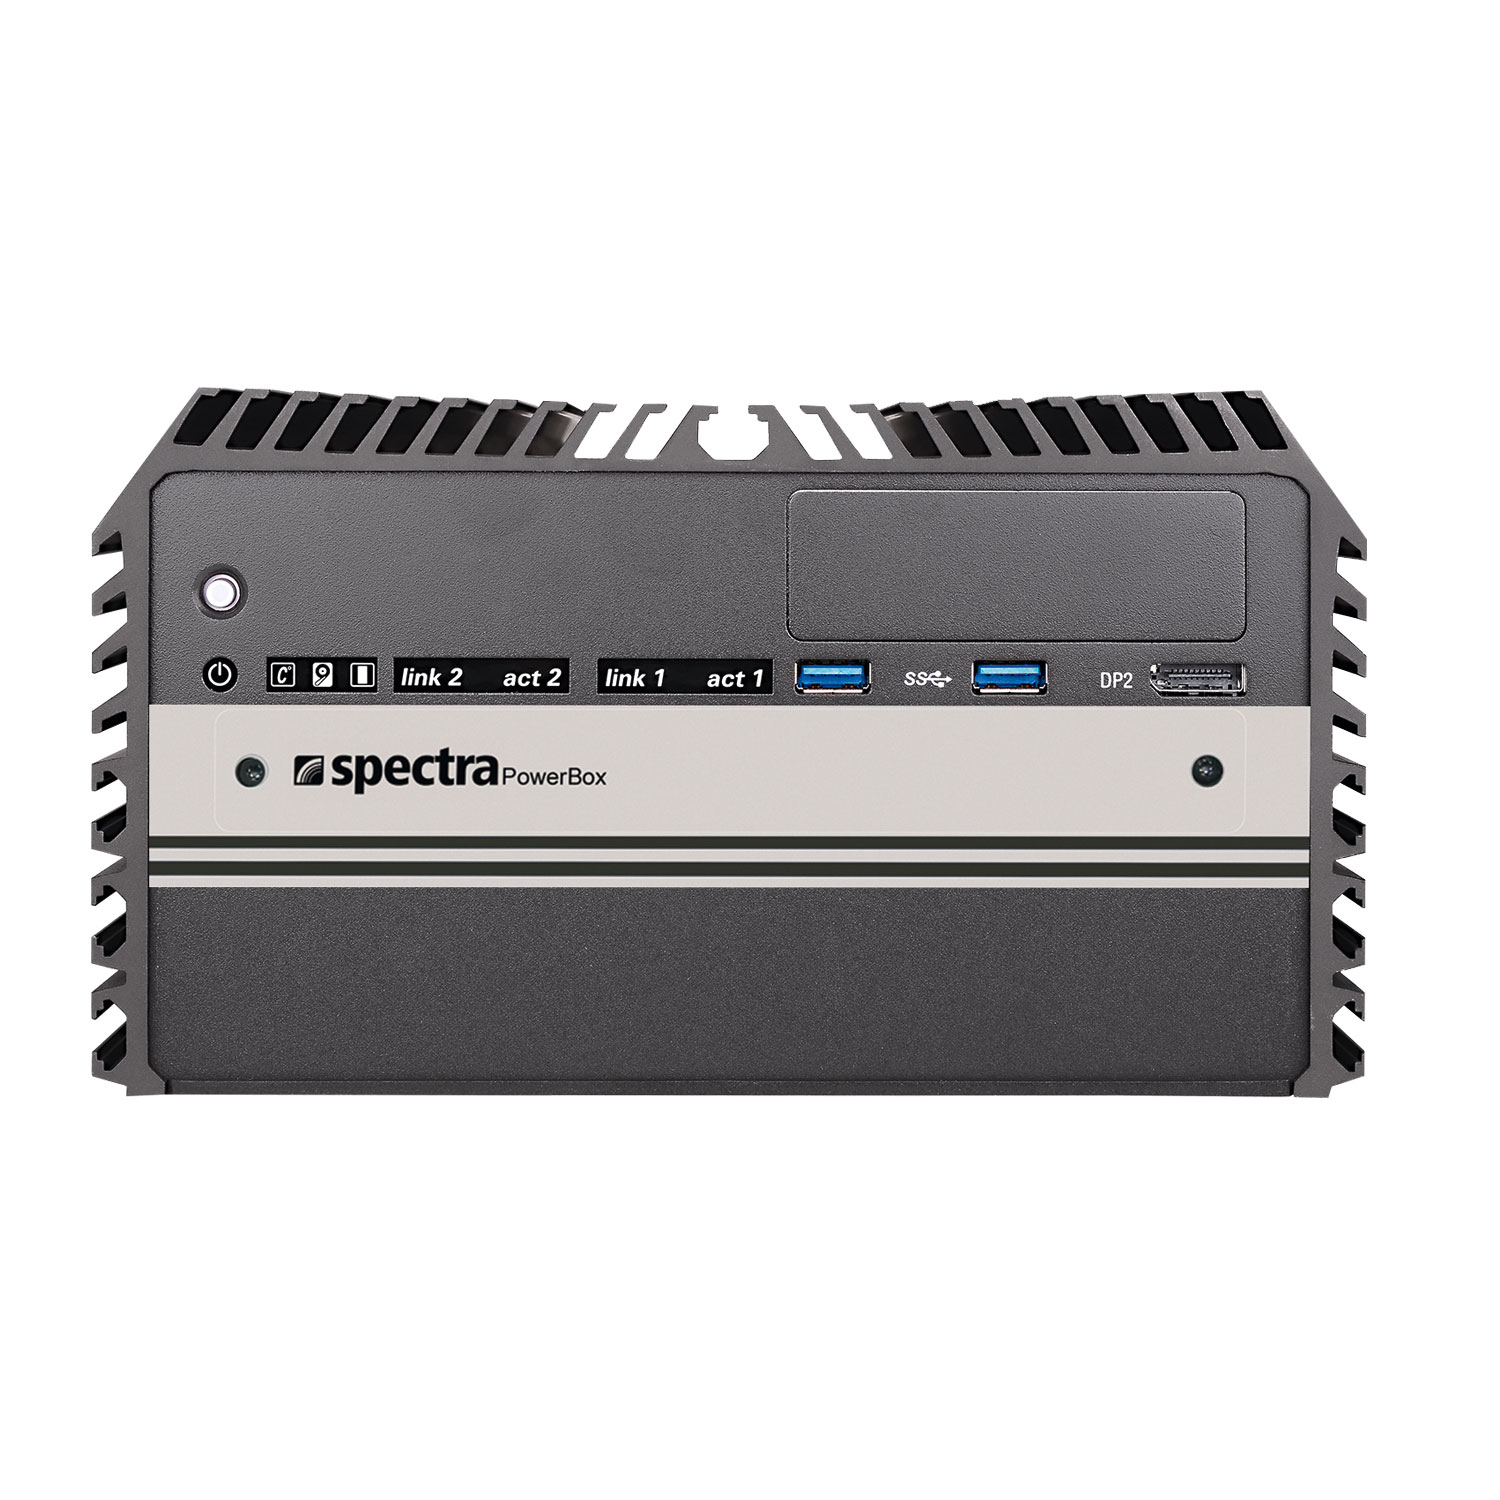 Spectra-PowerBox-32A0-Mini-PC